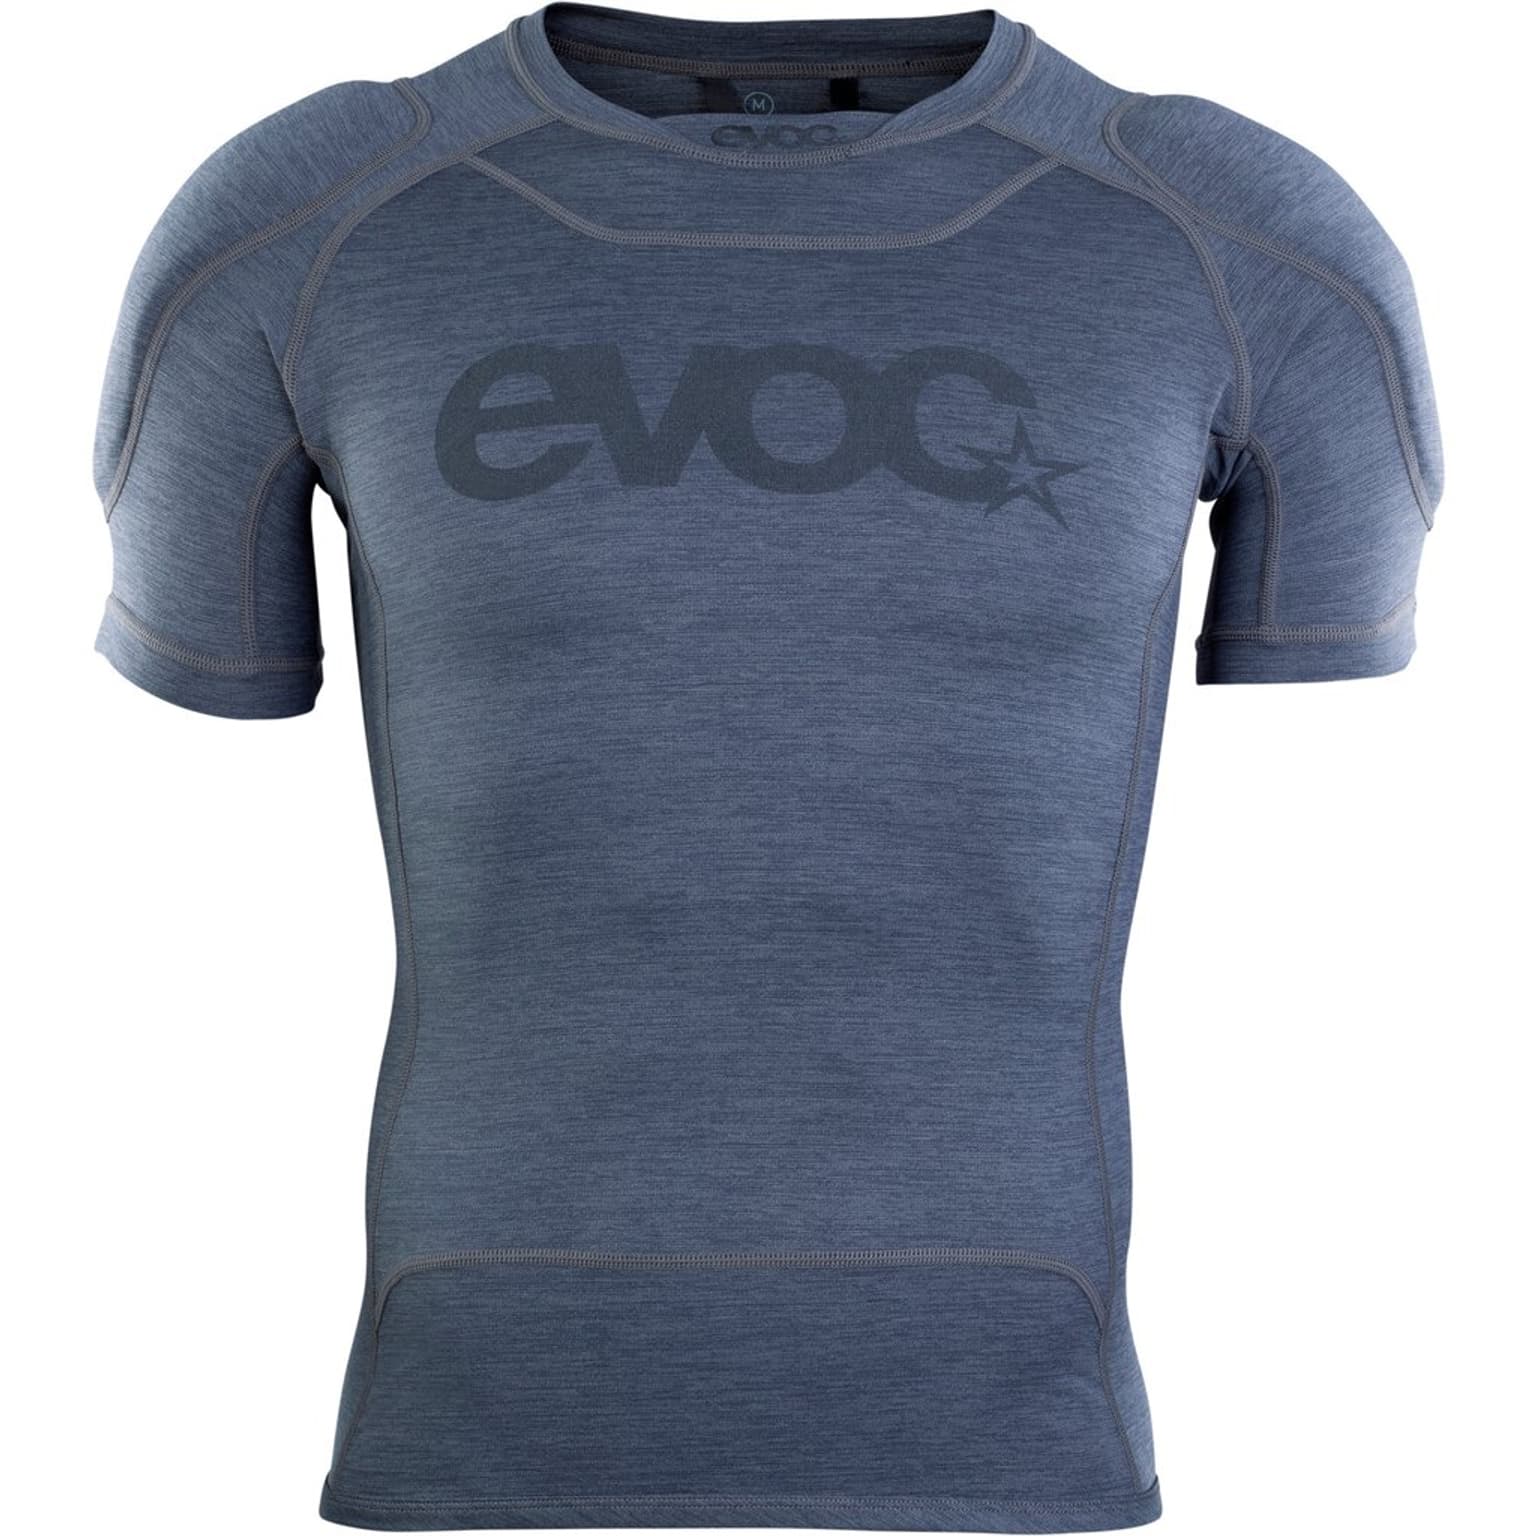 Evoc Evoc Enduro Shirt Protezione grigio-scuro 1